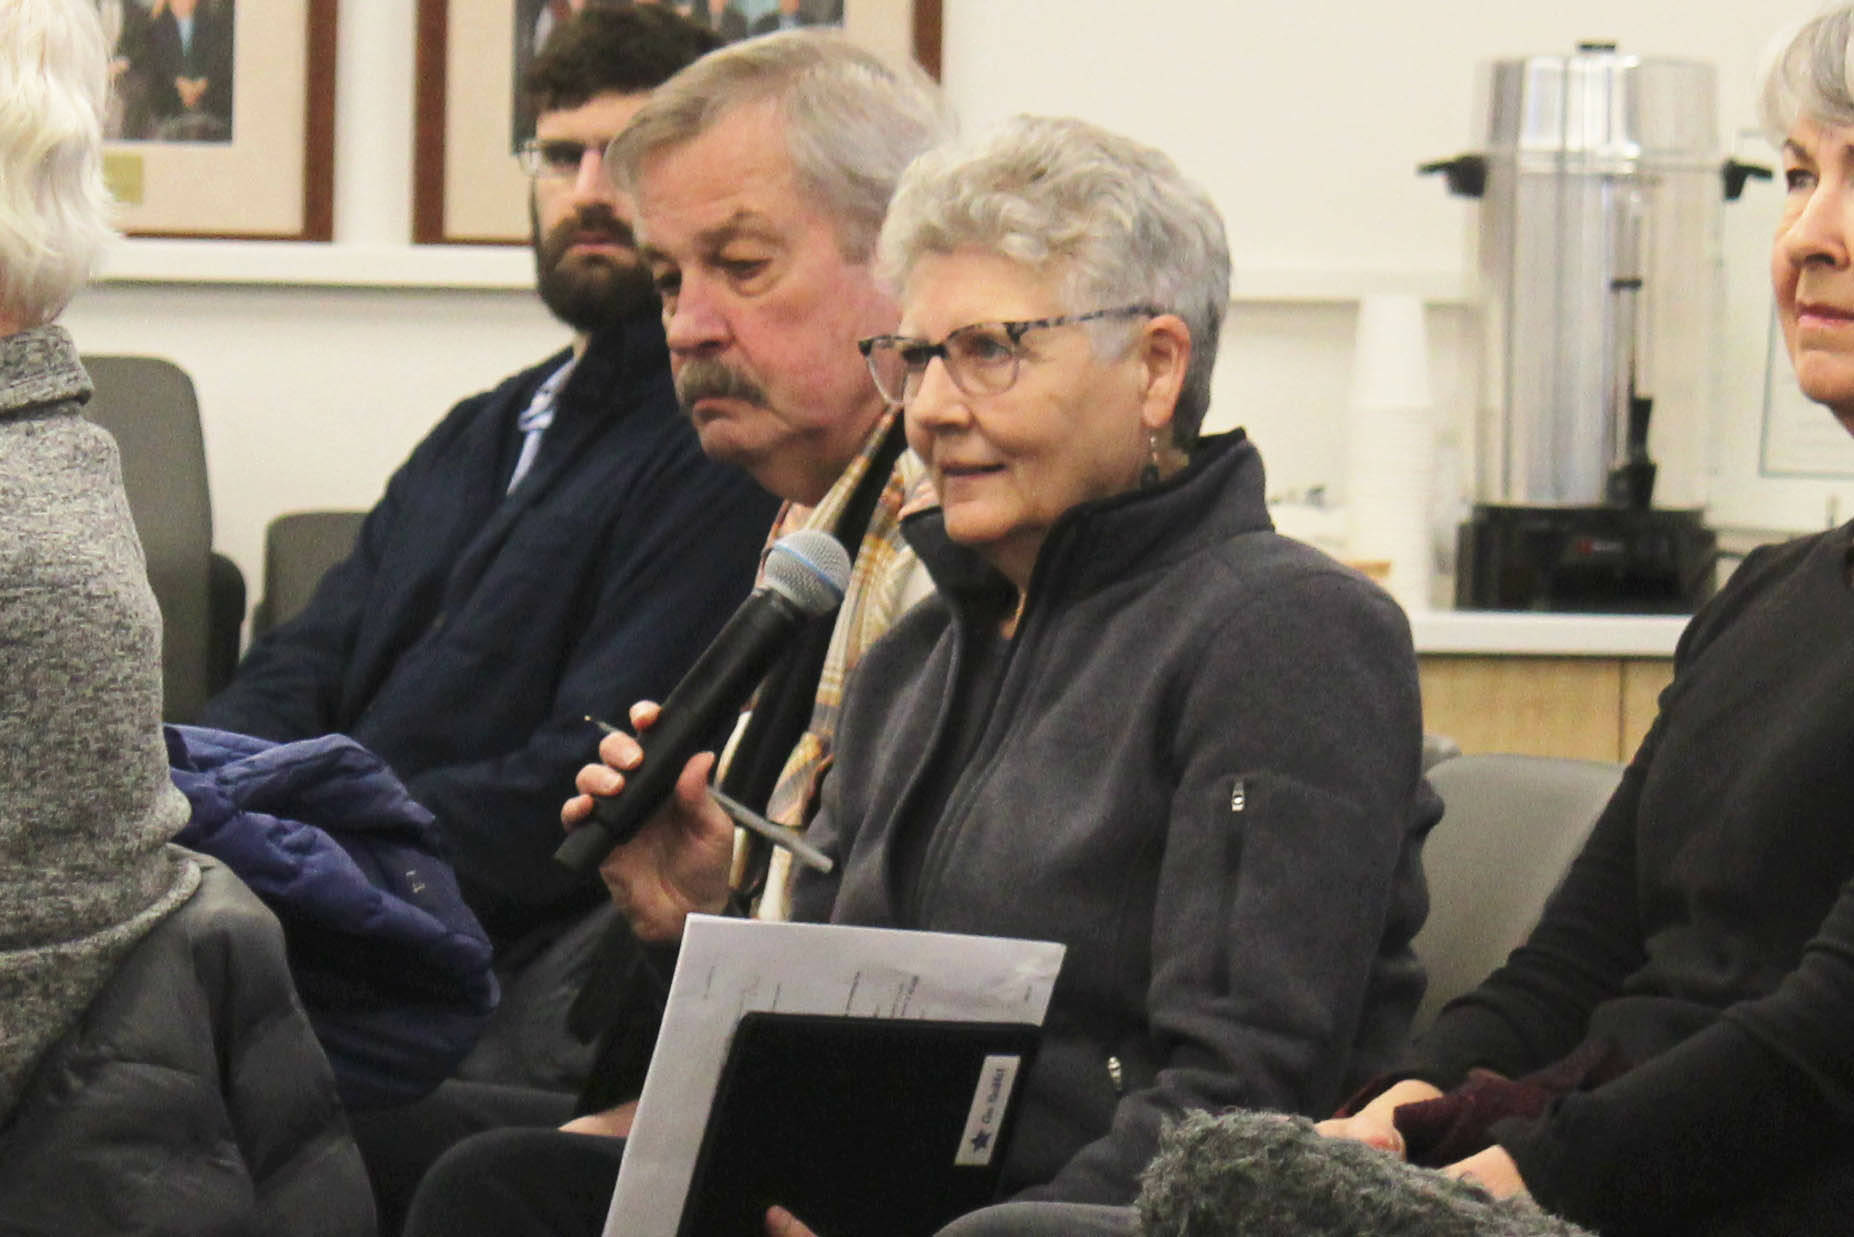 LaDawn Druce asks Sen. Jesse Bjorkman a question during a town hall event on Saturday, Feb. 25, 2023, in Soldotna, Alaska. (Ashlyn O’Hara/Peninsula Clarion)